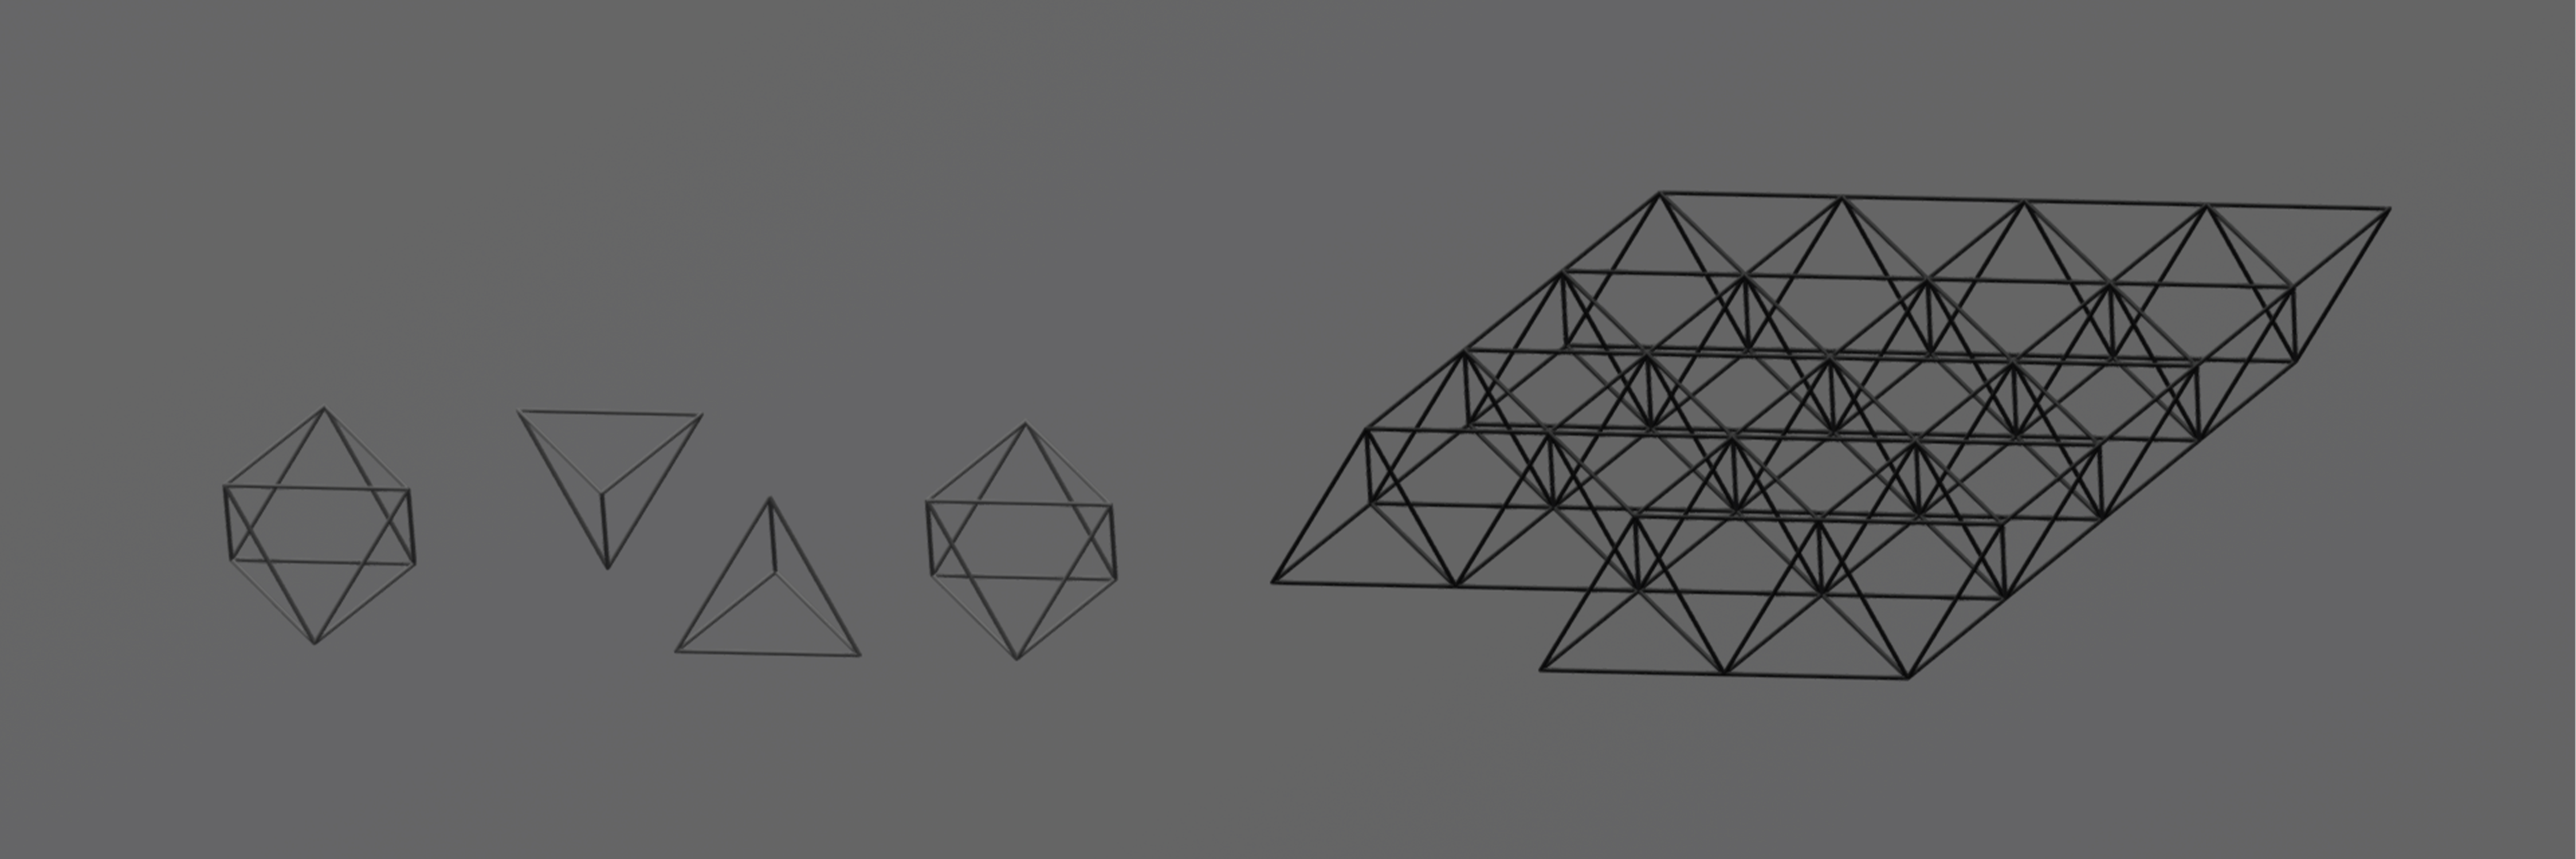 fig15_spatial_tessellation.jpg